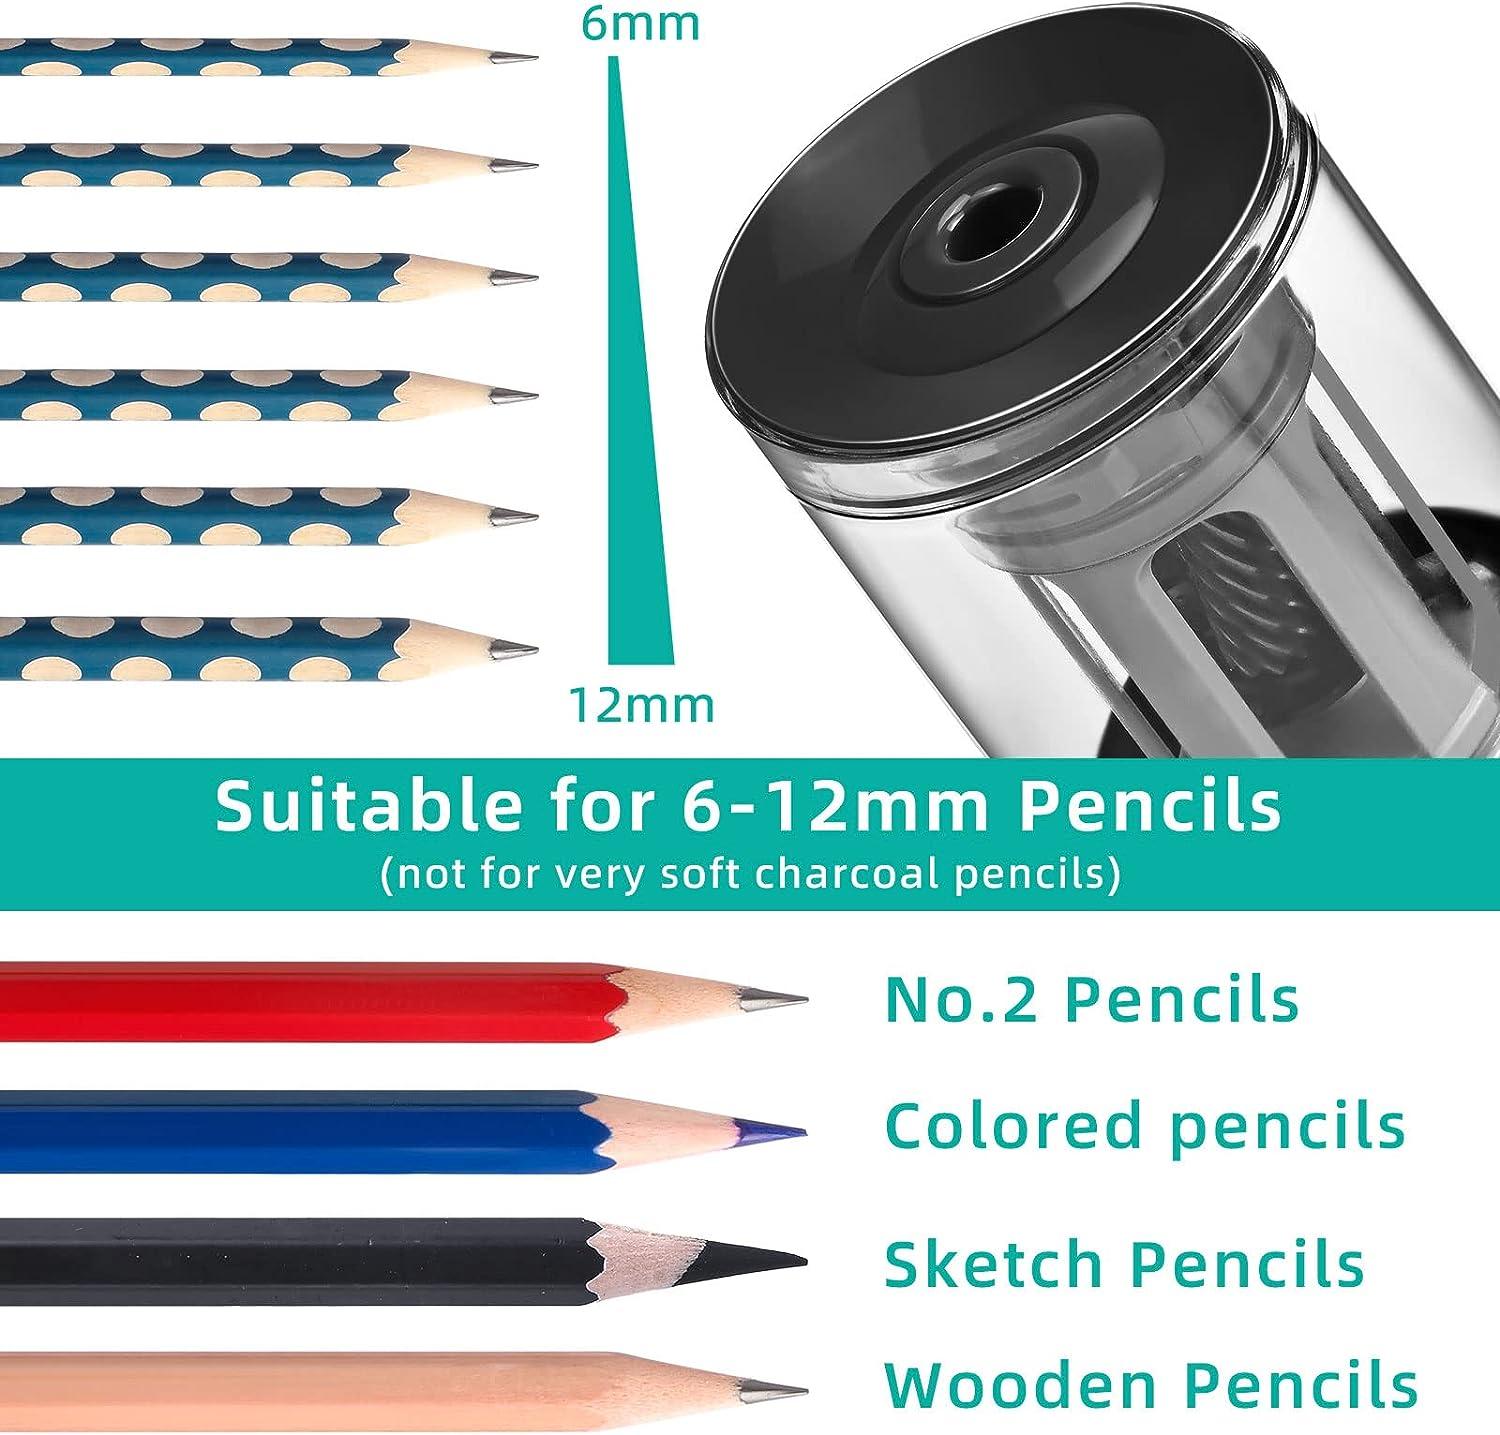 Electric Pencil Sharpener Super Sharp Pencil Sharpener for Colored Pencils  Auto Stop Fast Sharpen Pencil Sharpener Plug in for 6-12mm  No.2/Colored/Sketch Pencils Suit for School Office (Black)